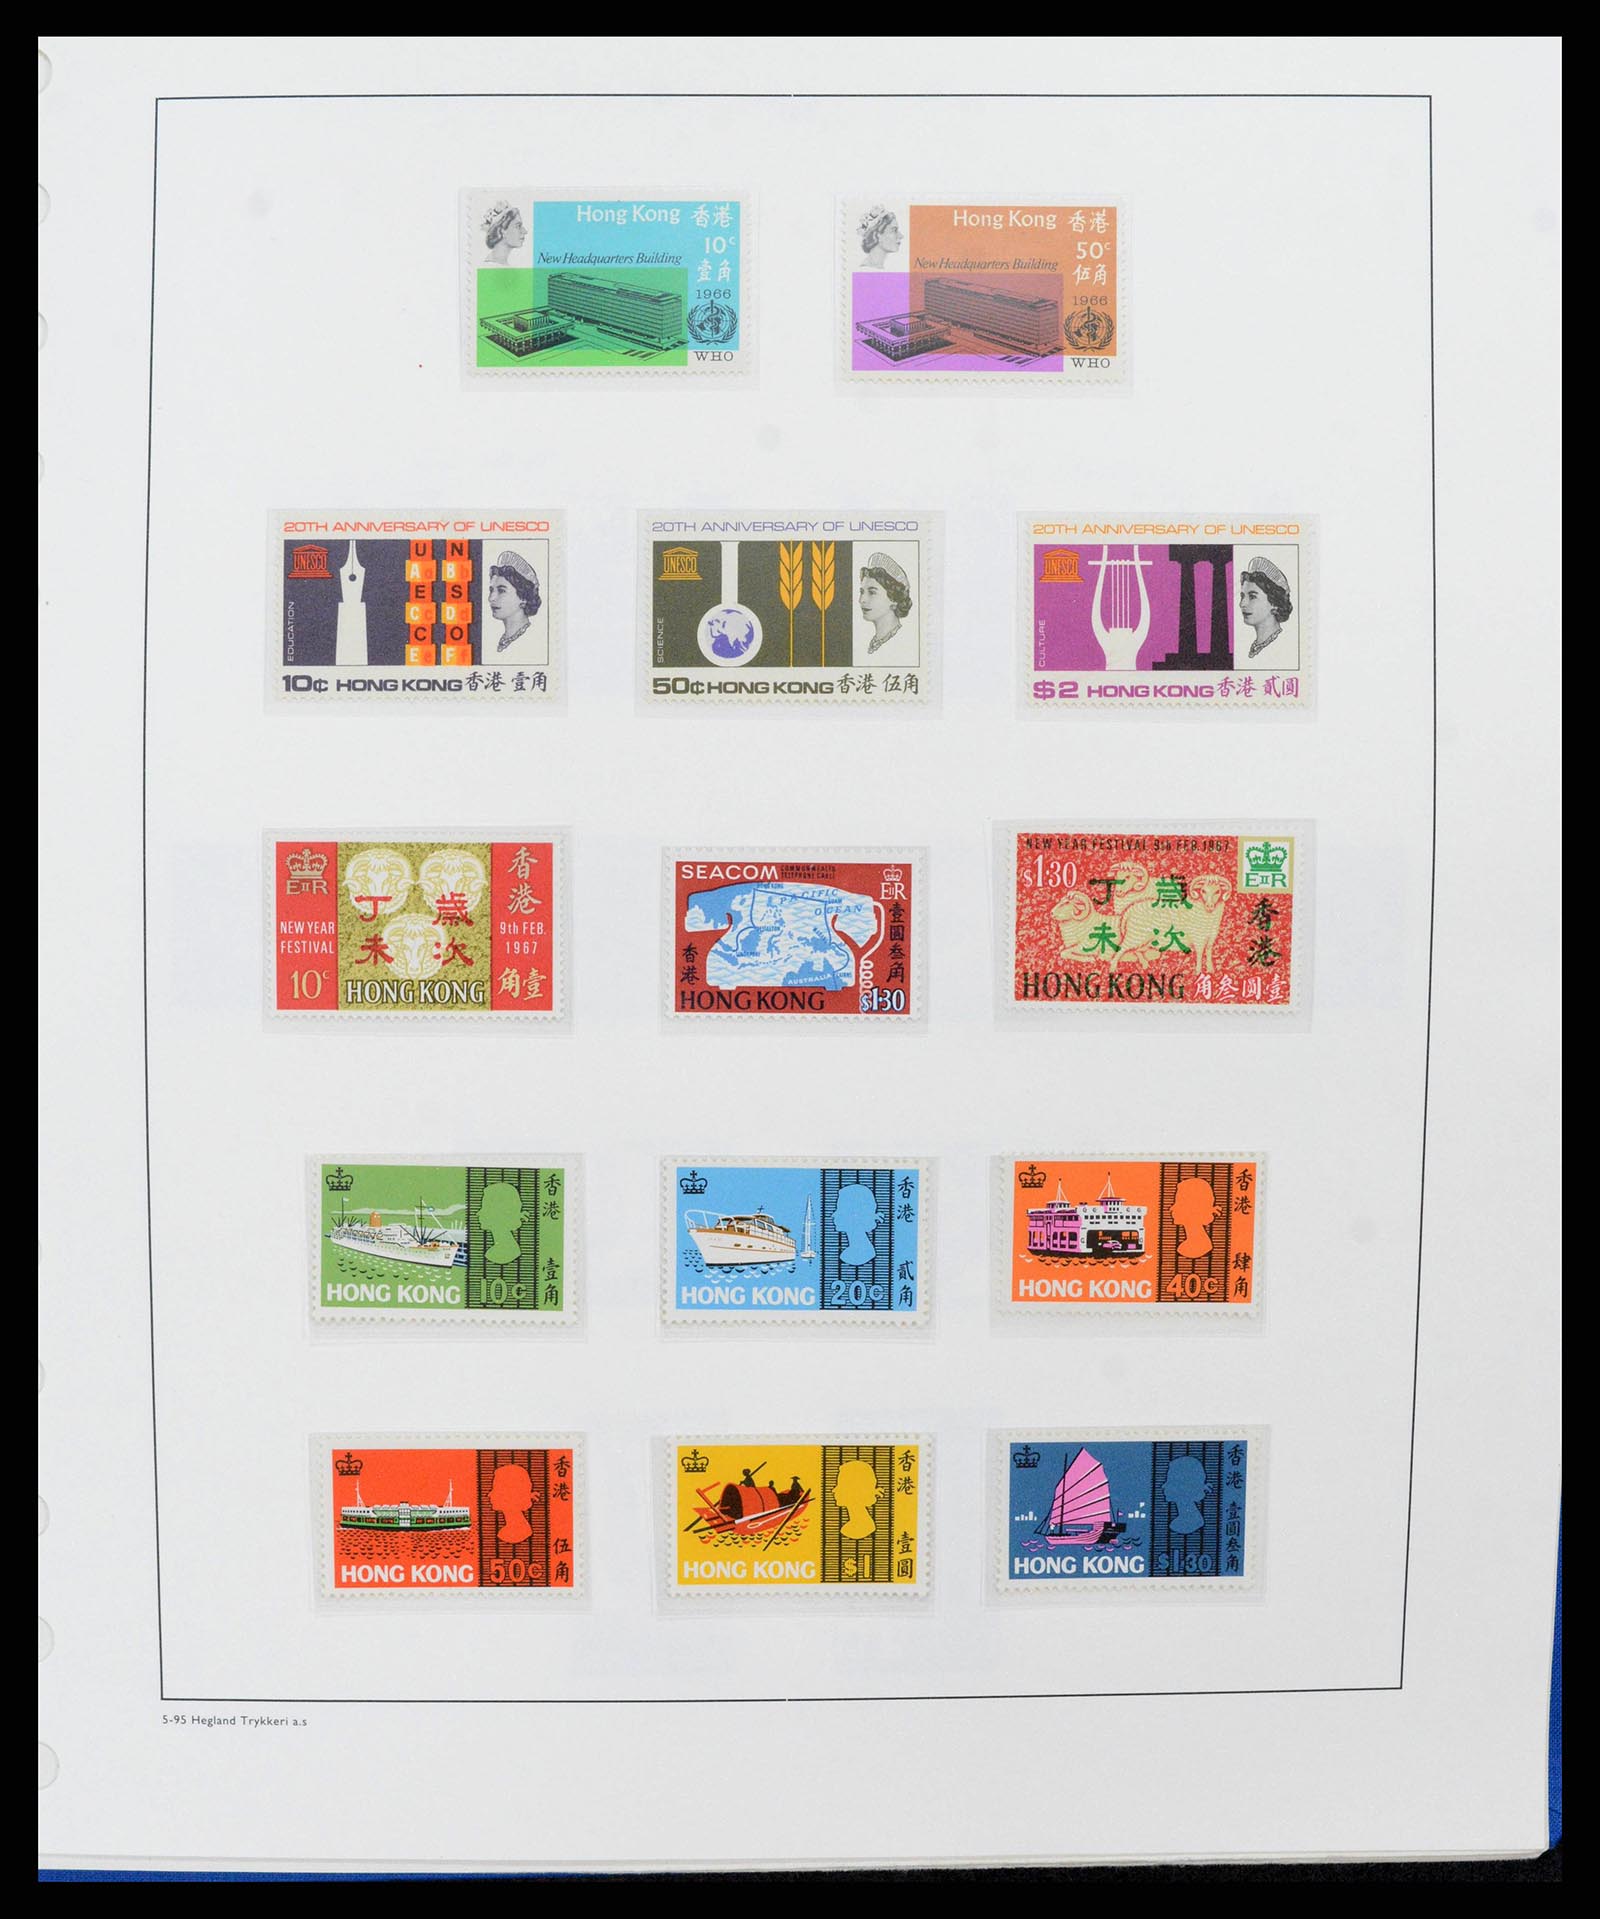 37955 0056 - Stamp collection 37955 Hong Kong supercollection 1862-2007.